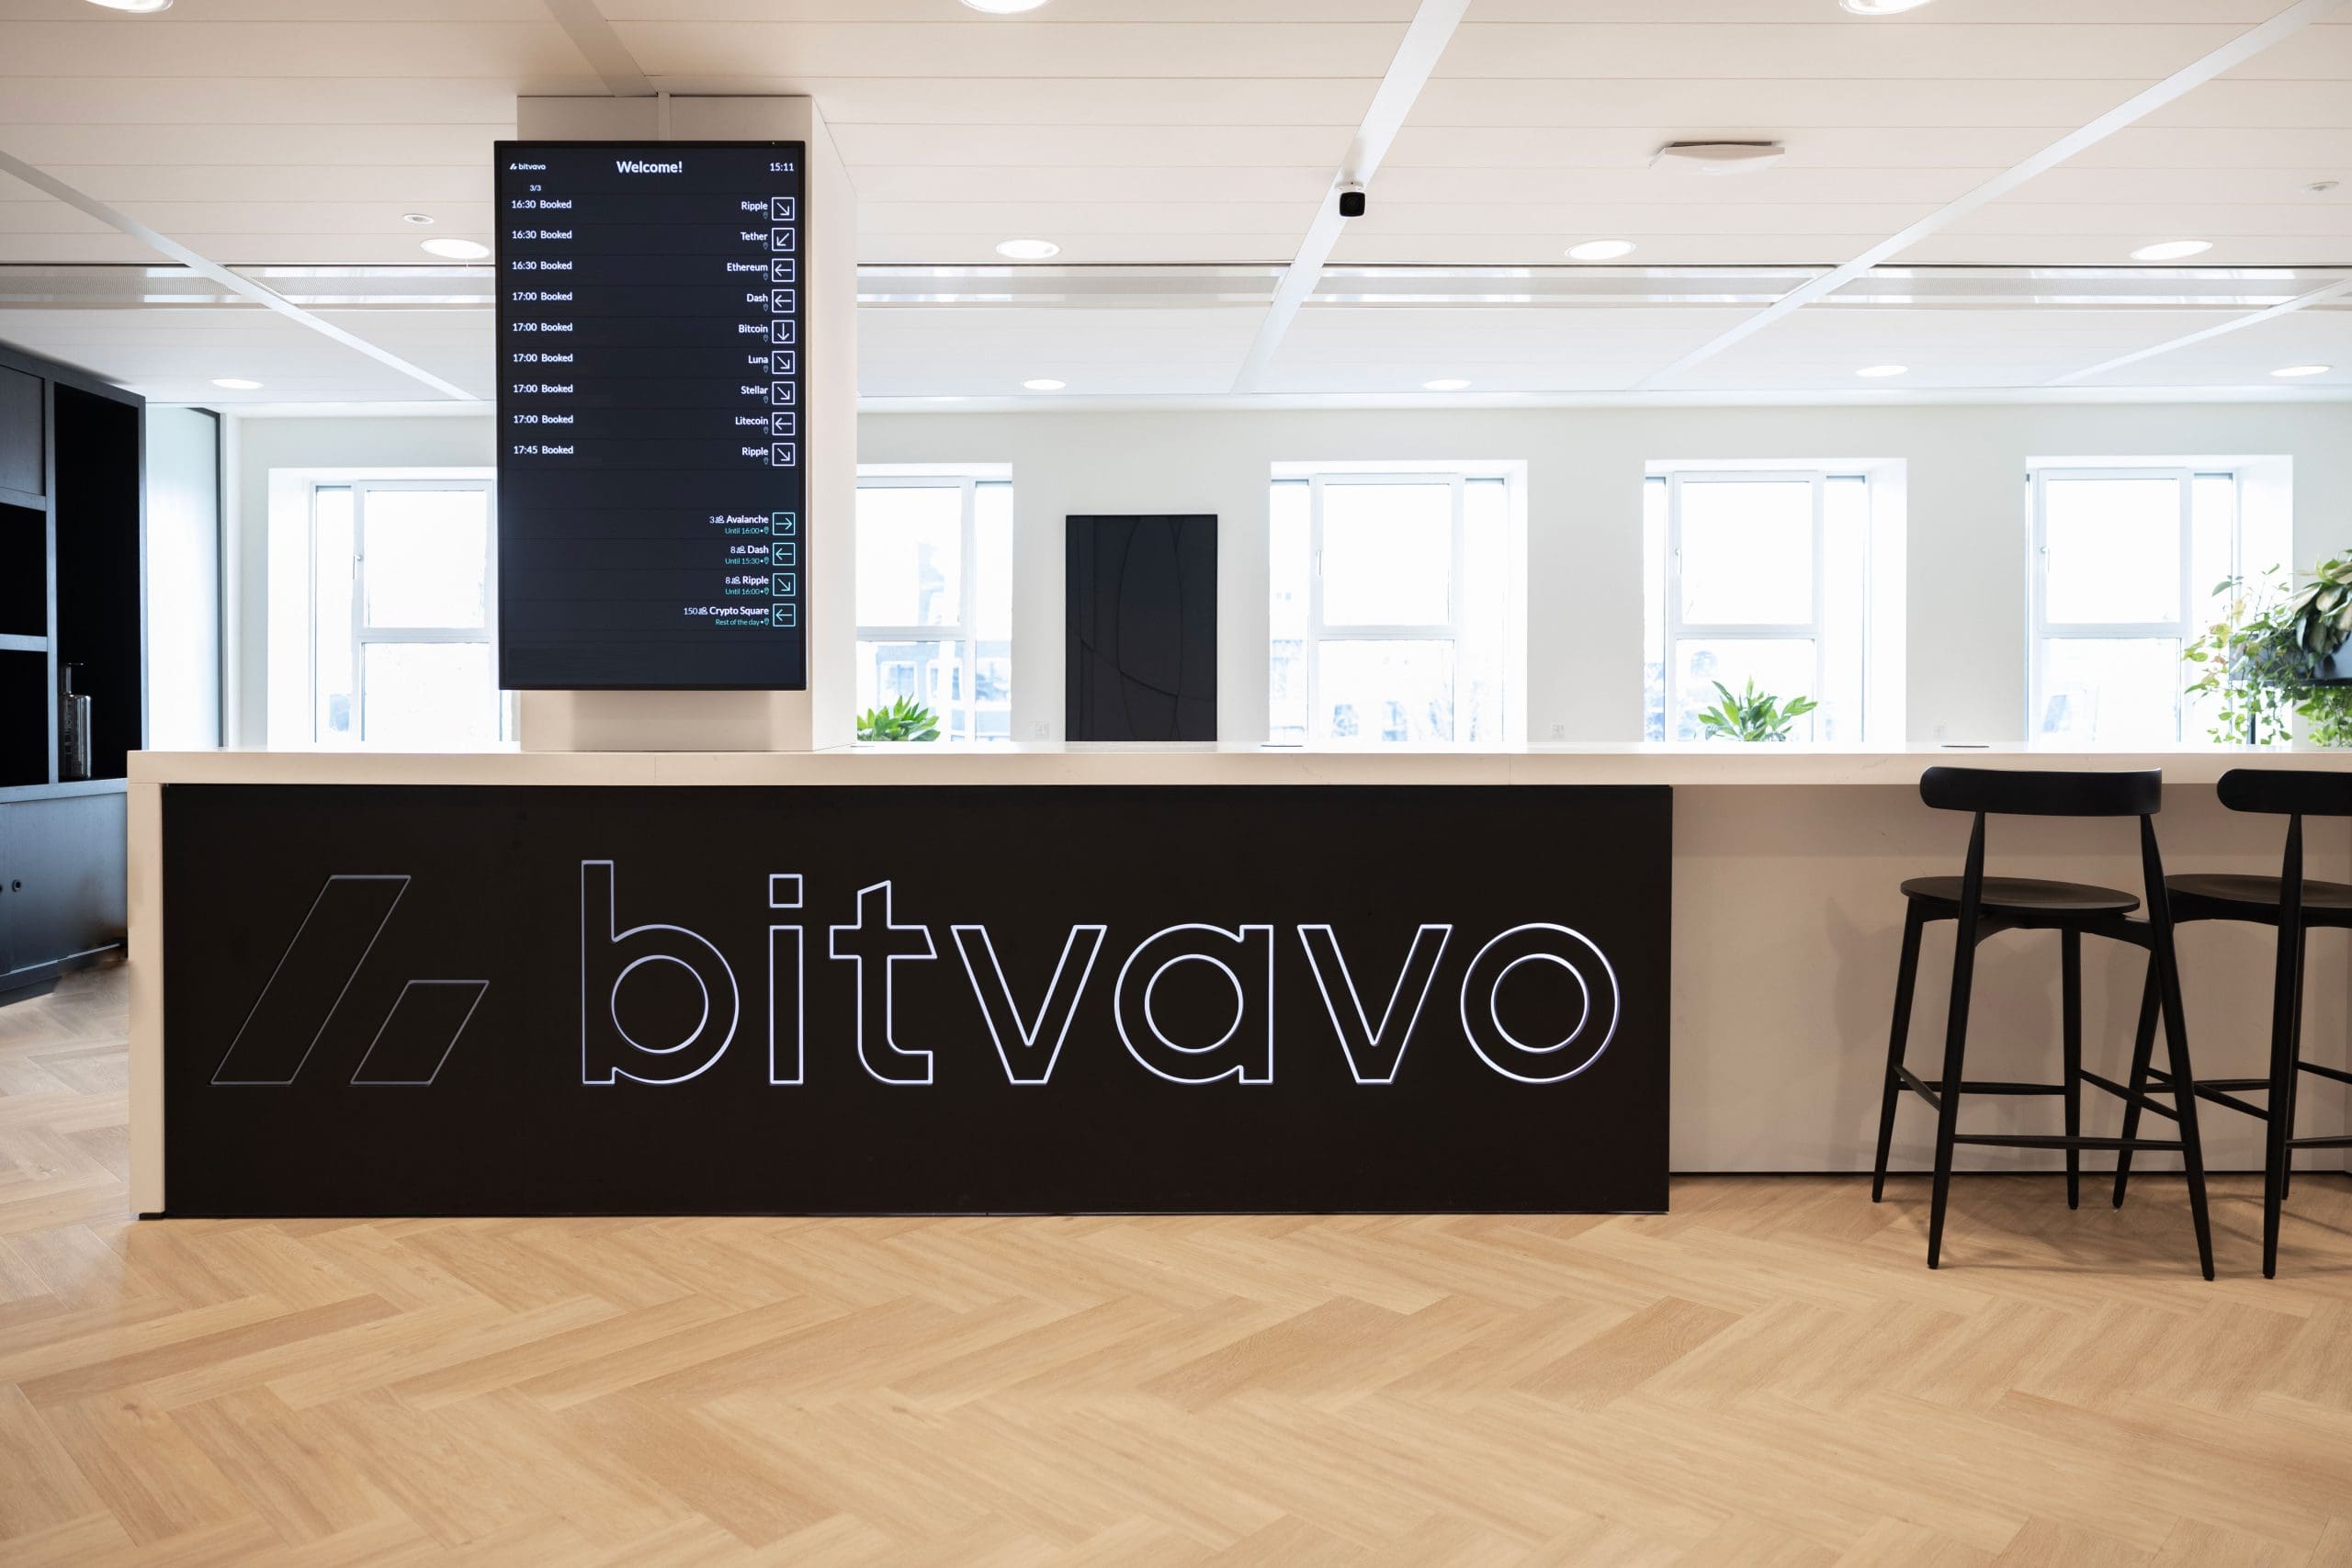 Bitvavo verlaat Duitse markt met oog op Europese expansie